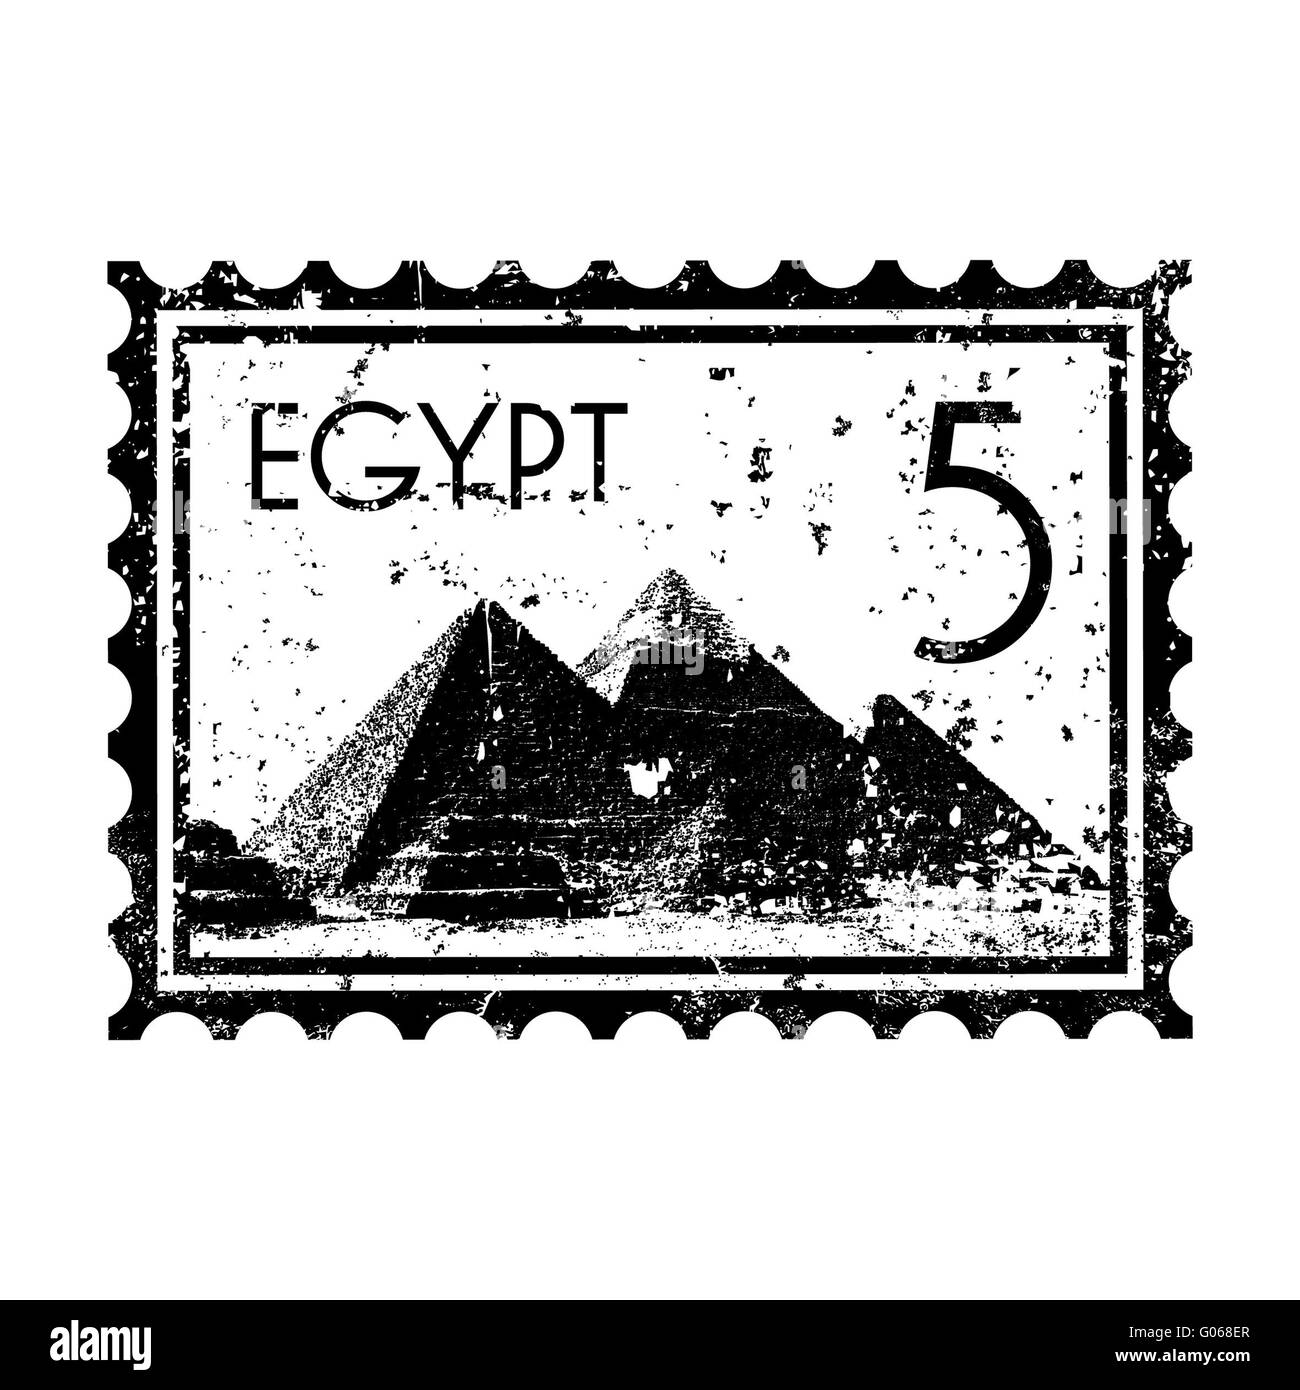 Vector illustration of single Egypt print icon Stock Photo